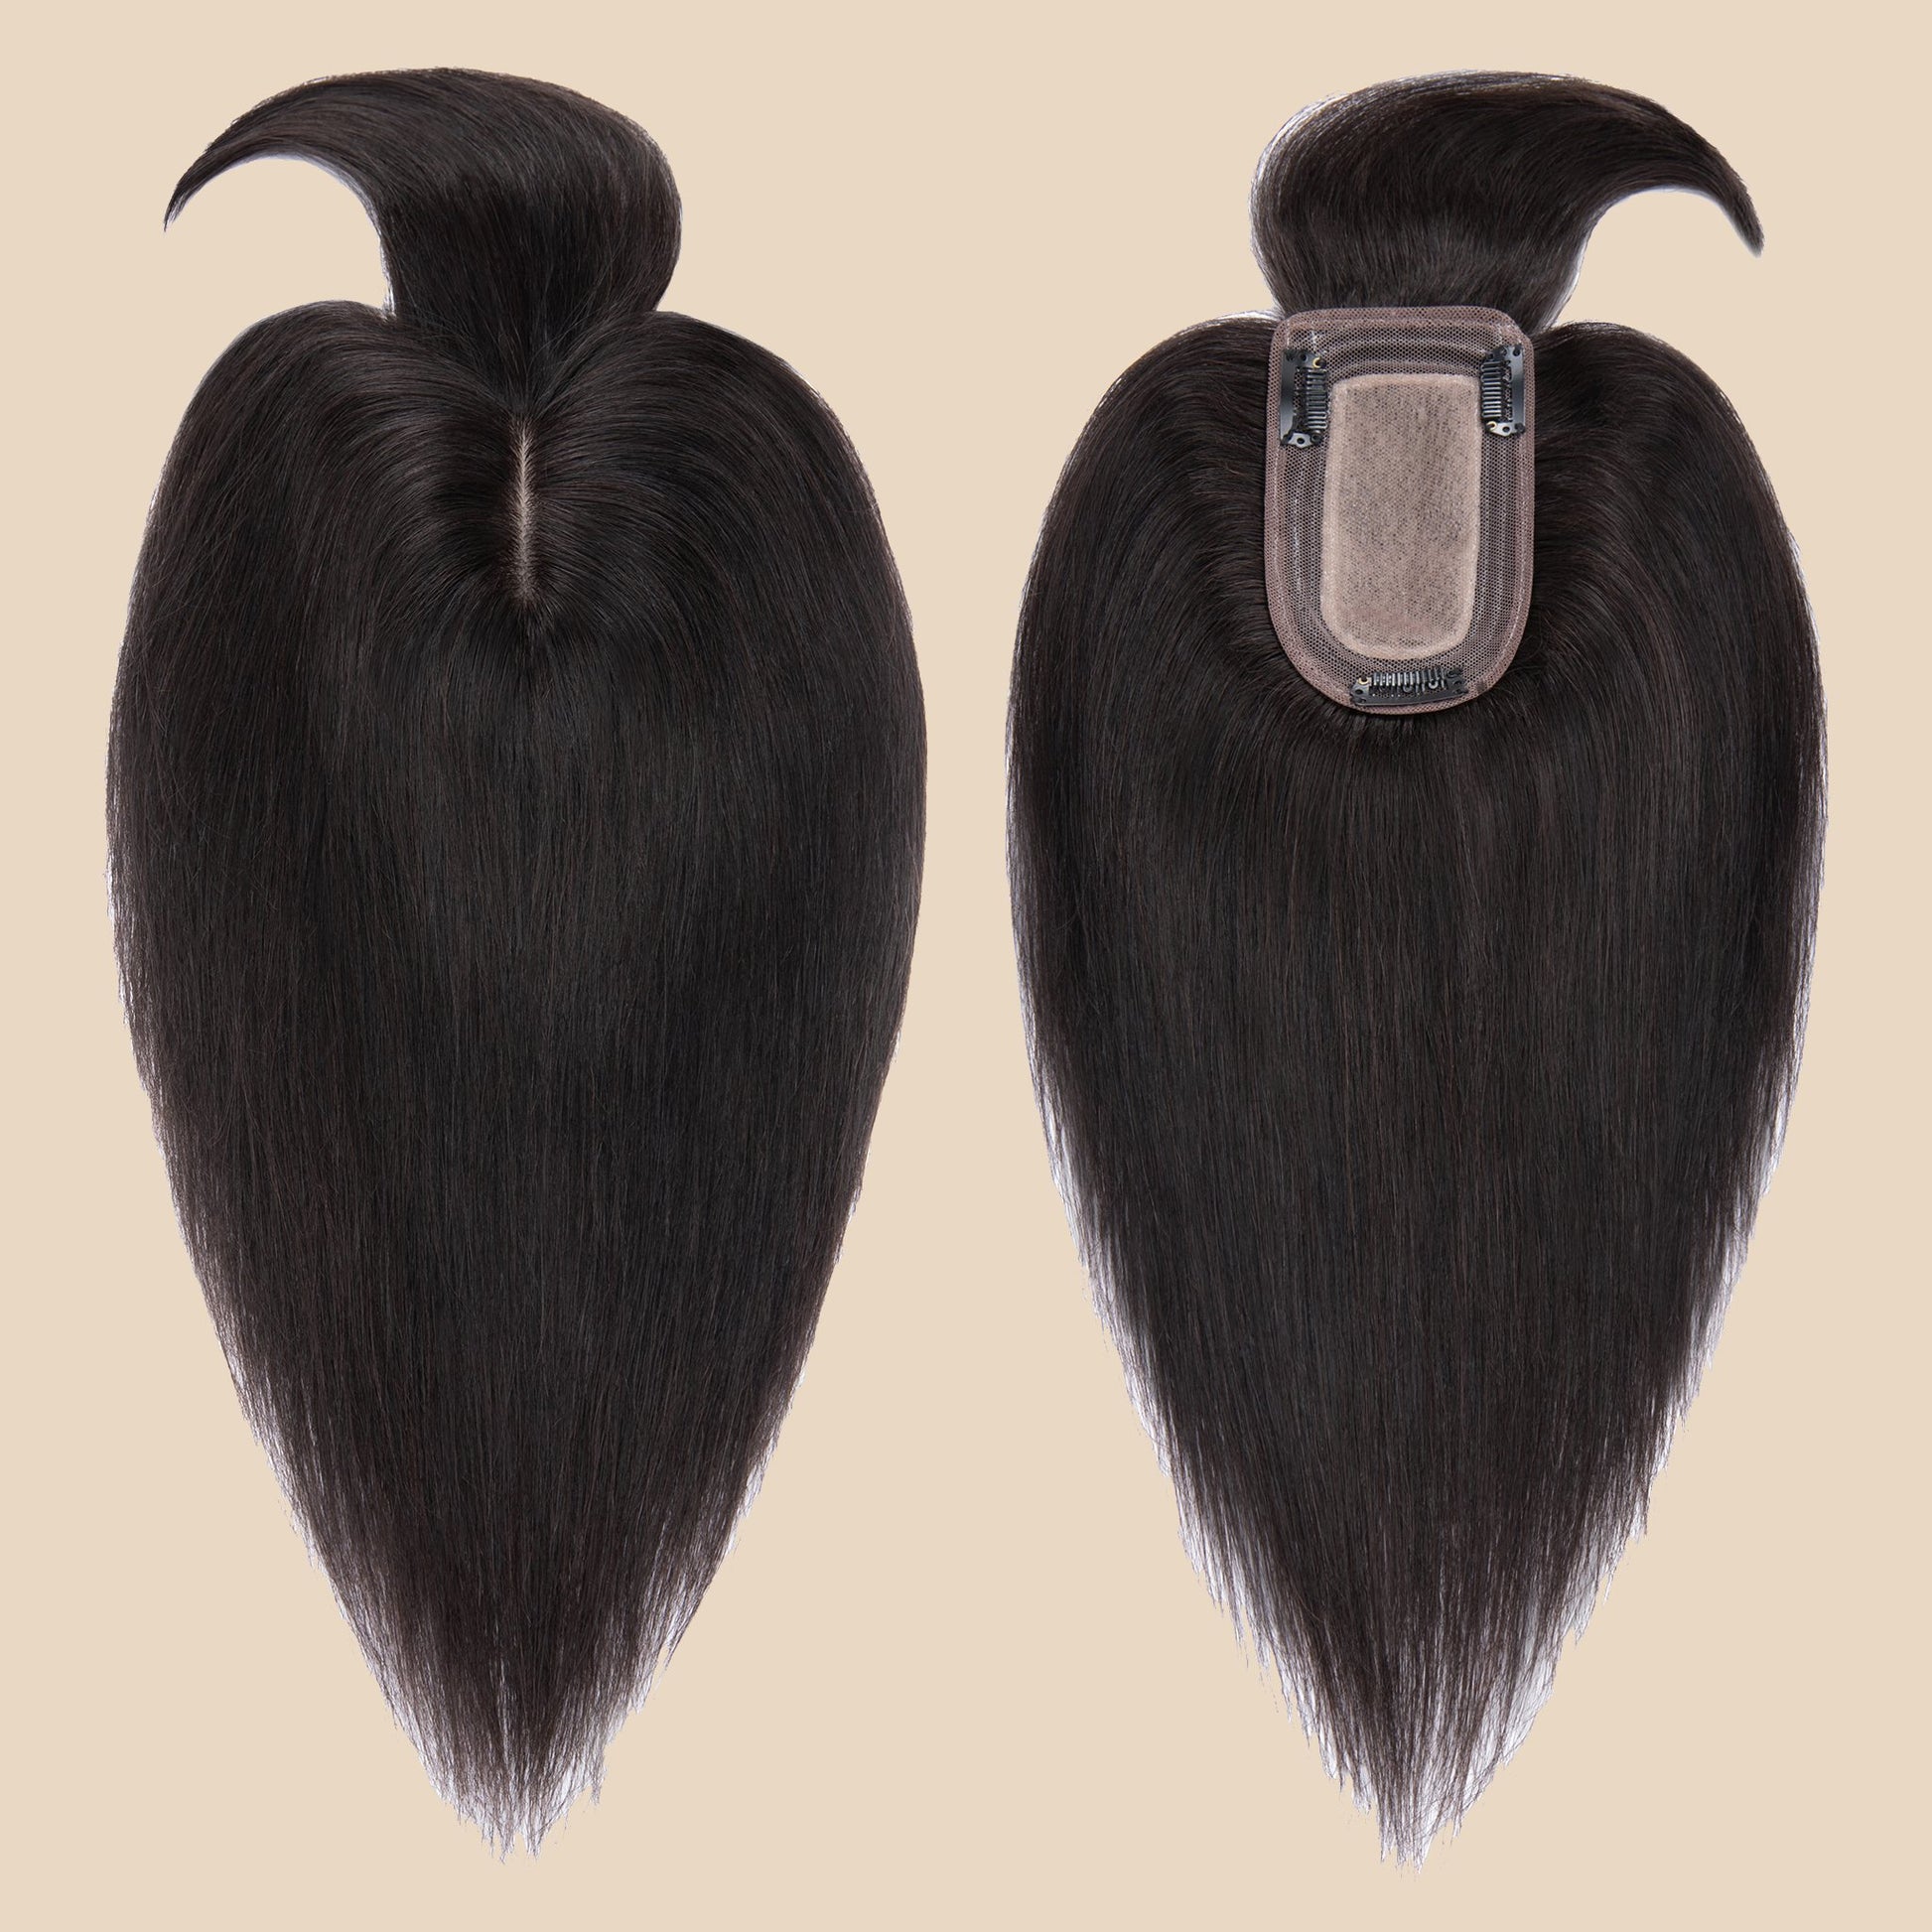 3x5" Bionic Scalp Top Natural Black Human Hair Topper with Bangs segohair.com